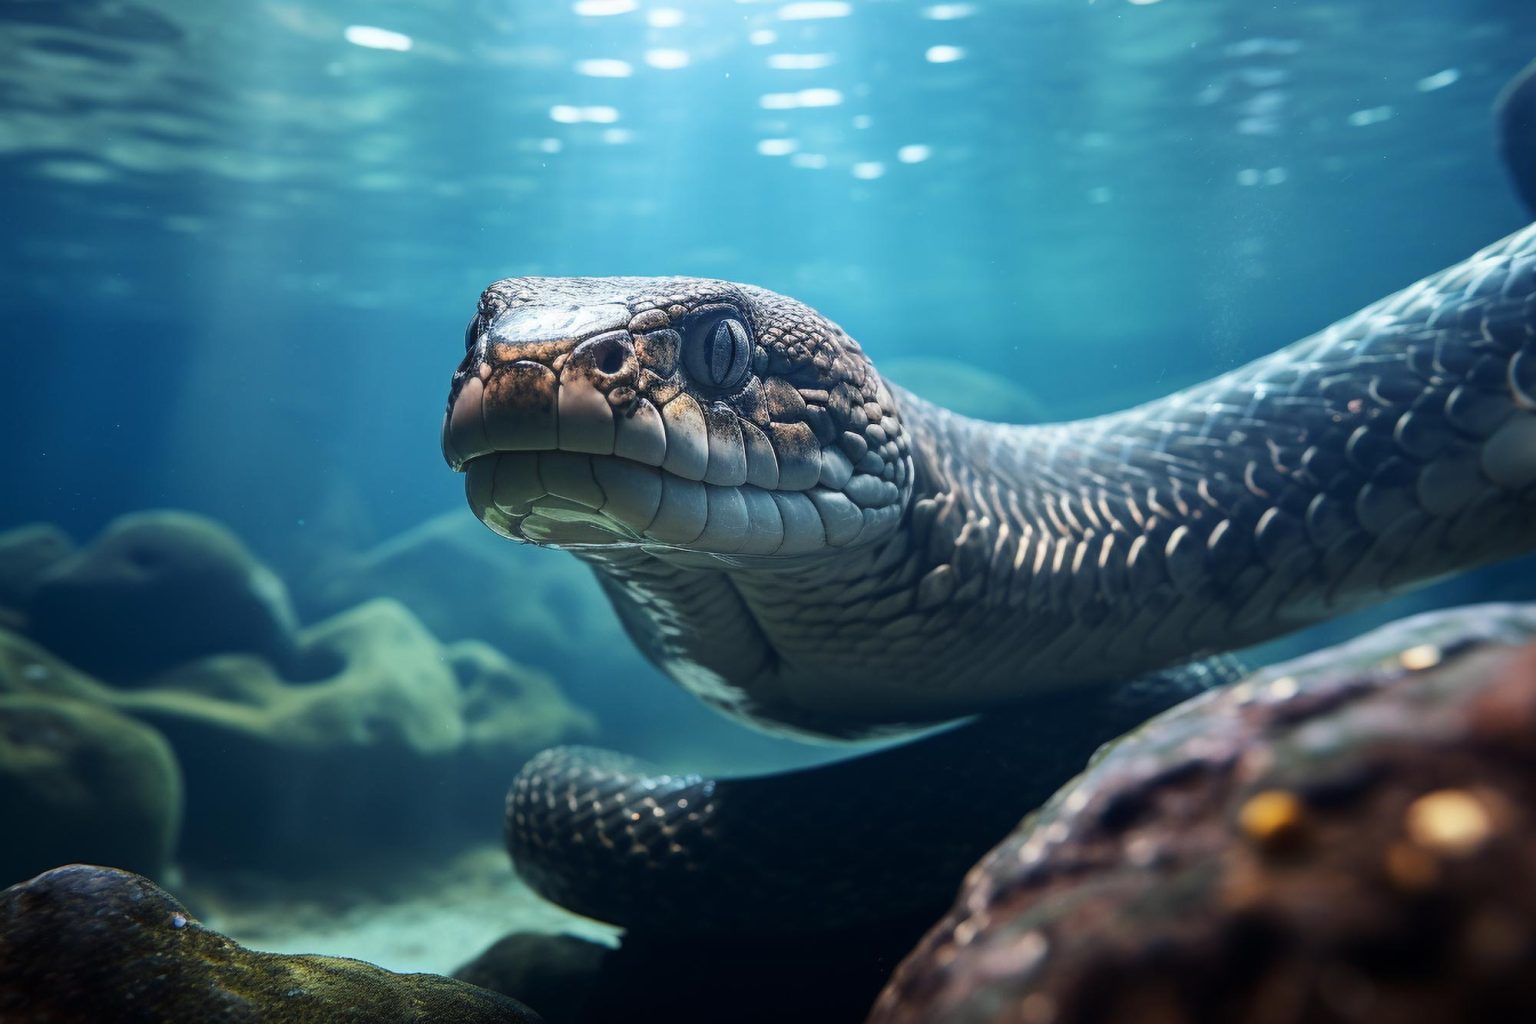 https://scitechdaily.com/images/Underwater-Sea-Snake-Art-Concept-1536x1024.jpg?ezimgfmt=ngcb2/notWebP